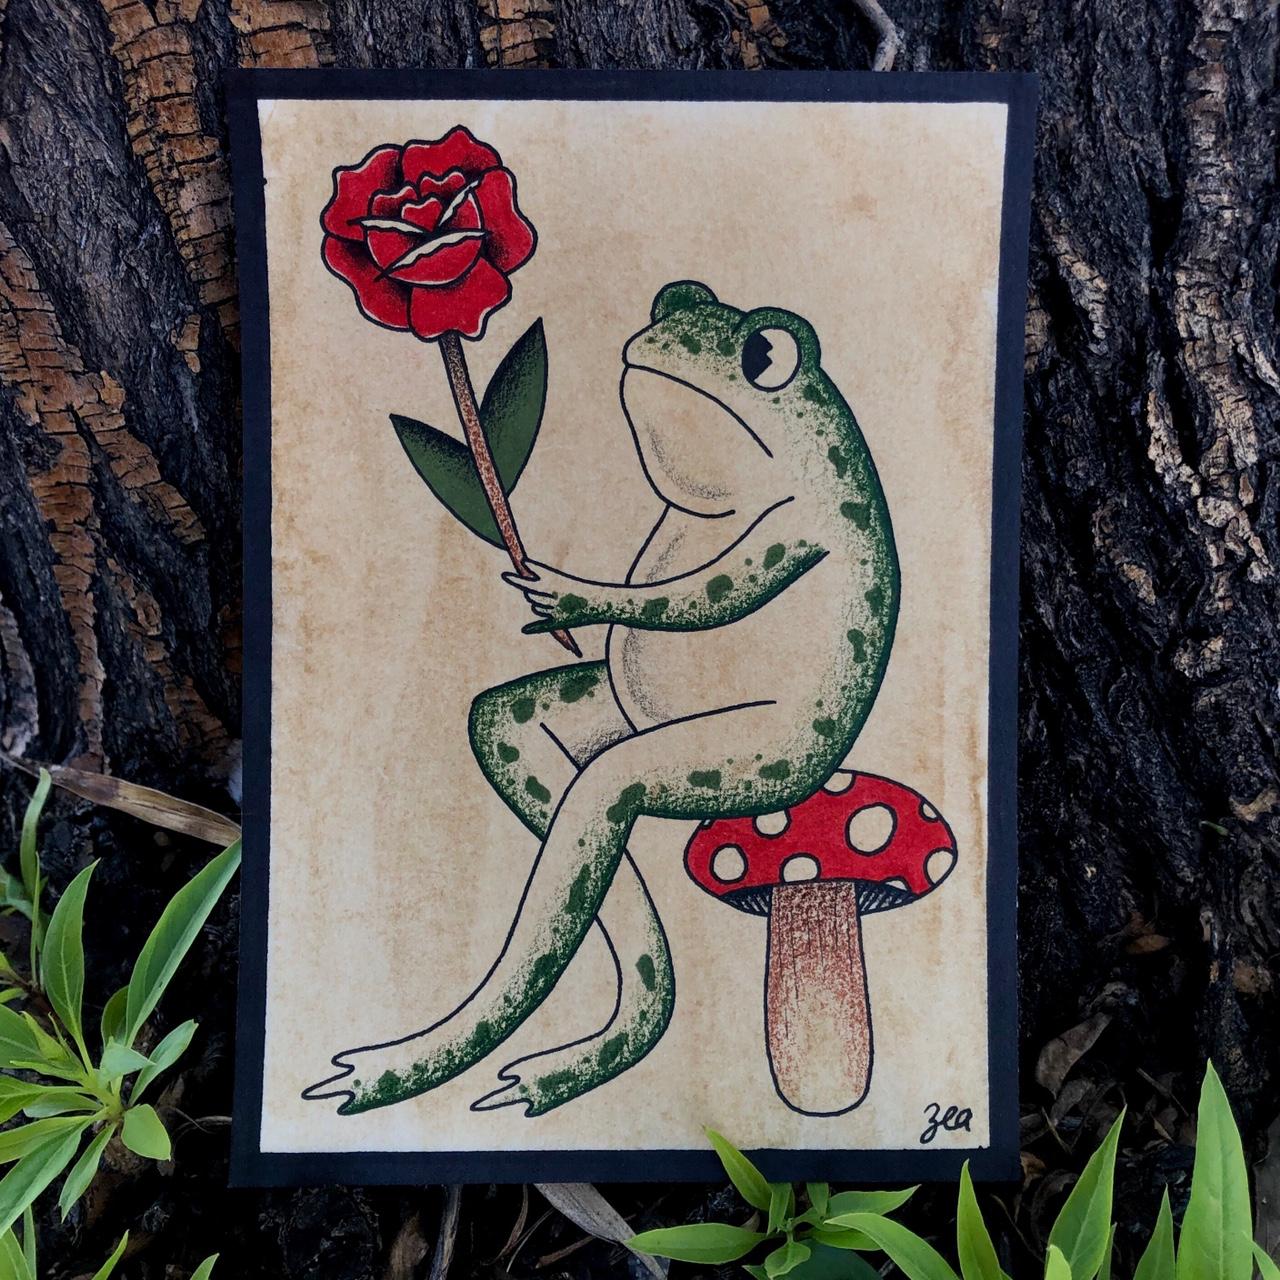 Frog with mushroom hat done by Siena Coronado at Home Free Tattoo in  Longview TX Custom piece 52821  rtattoos